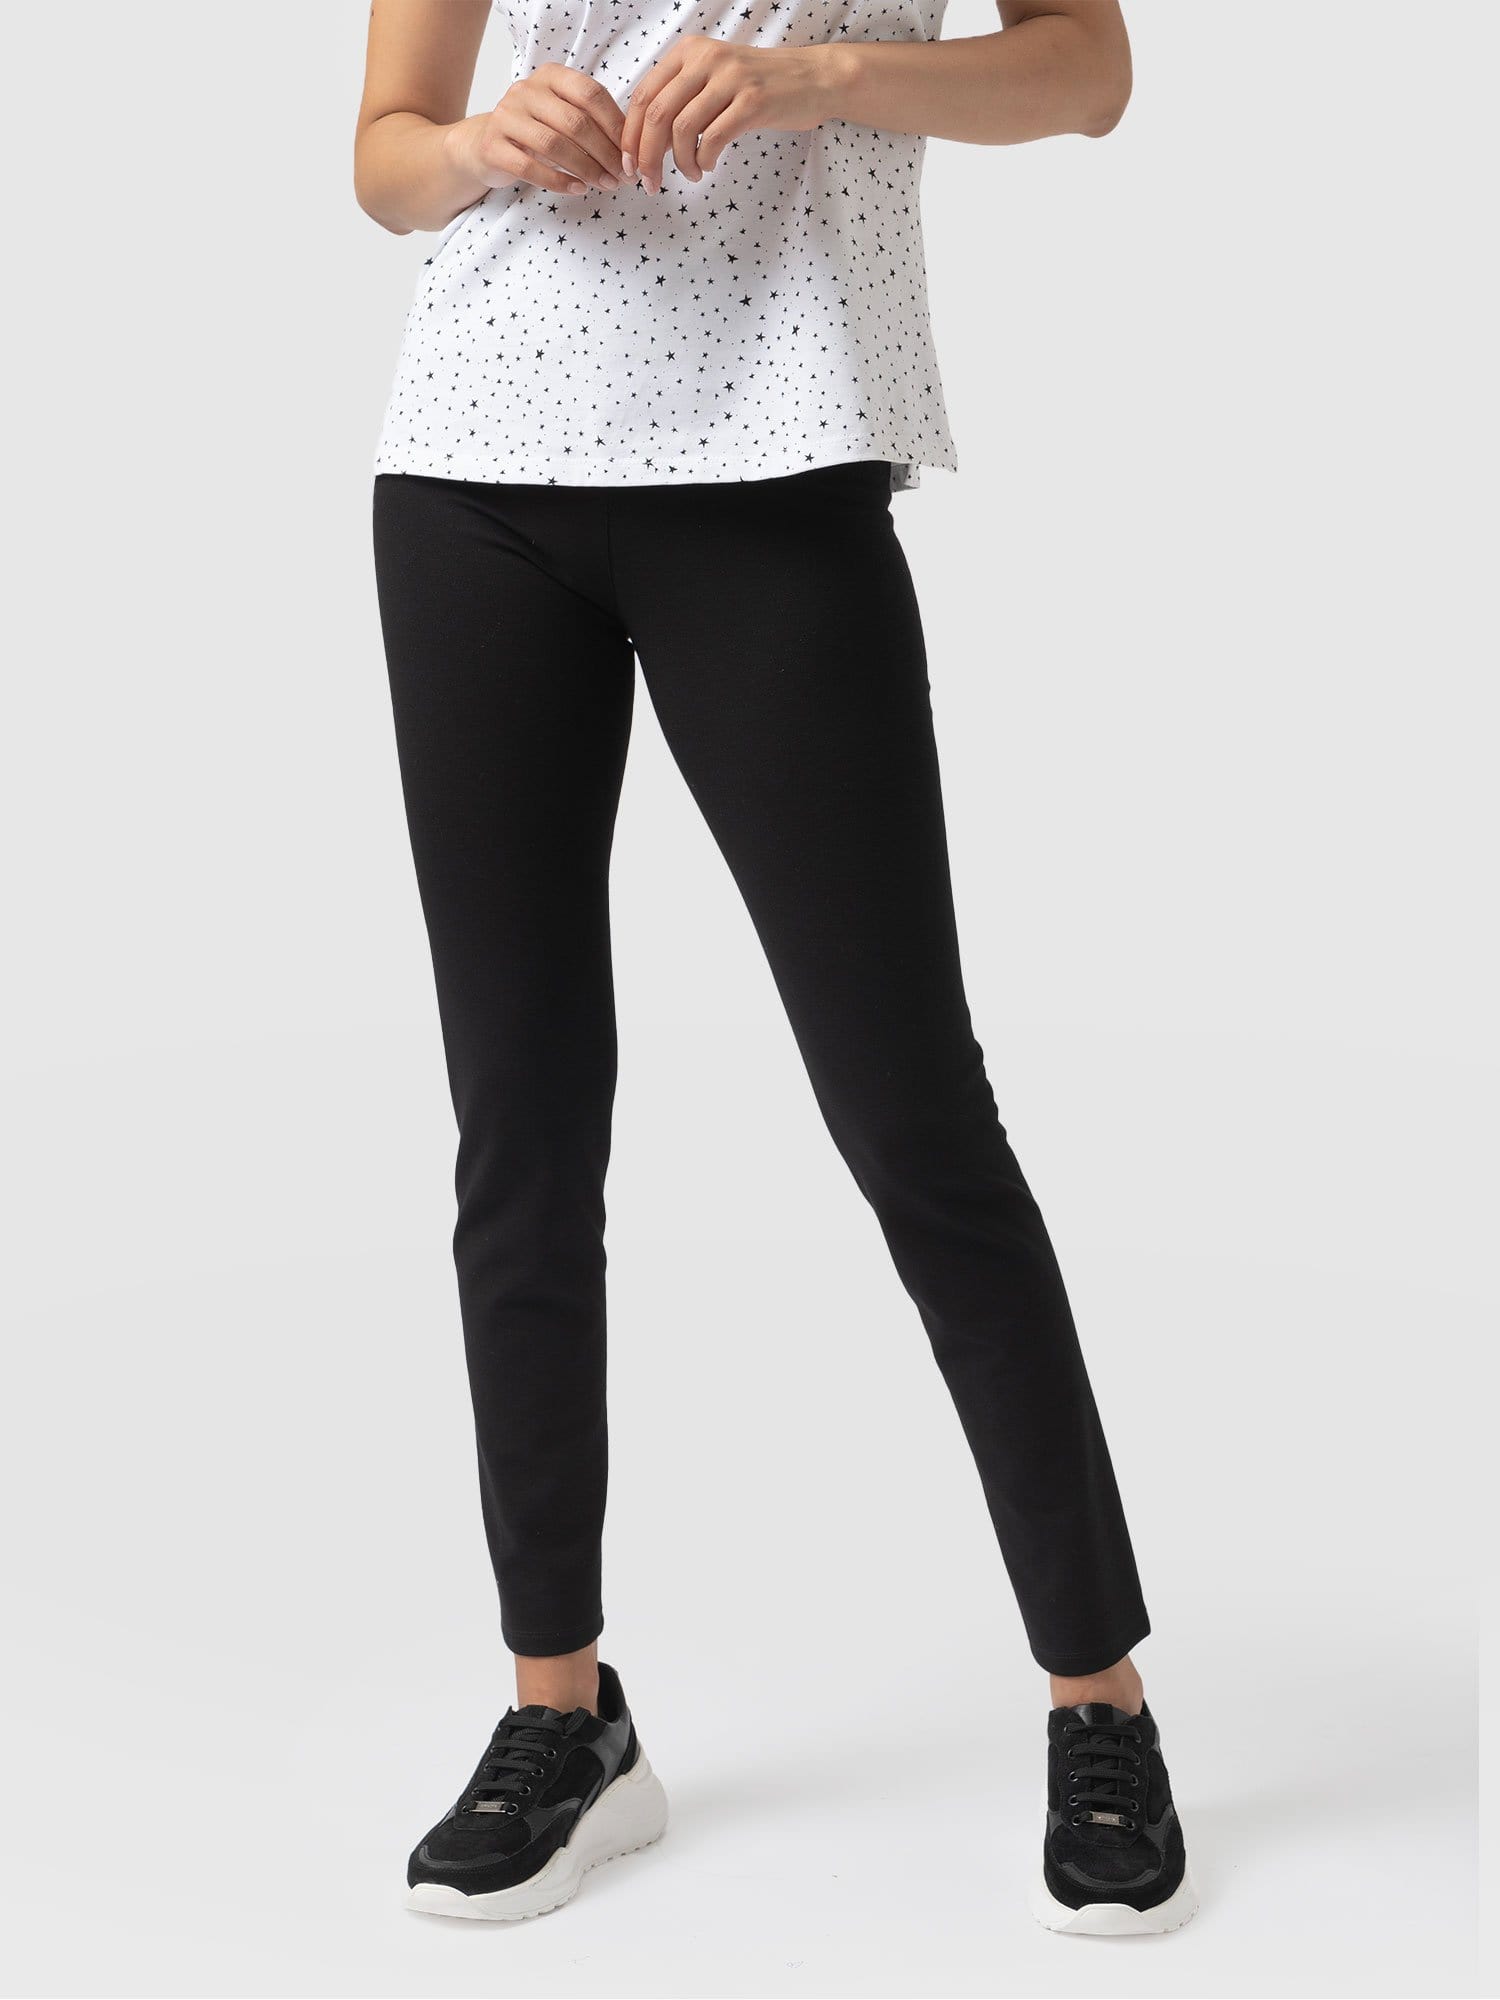 Ladies Plus Size Black Leggings Plain Basic Big And Tall Womens Super Soft  Pants | eBay